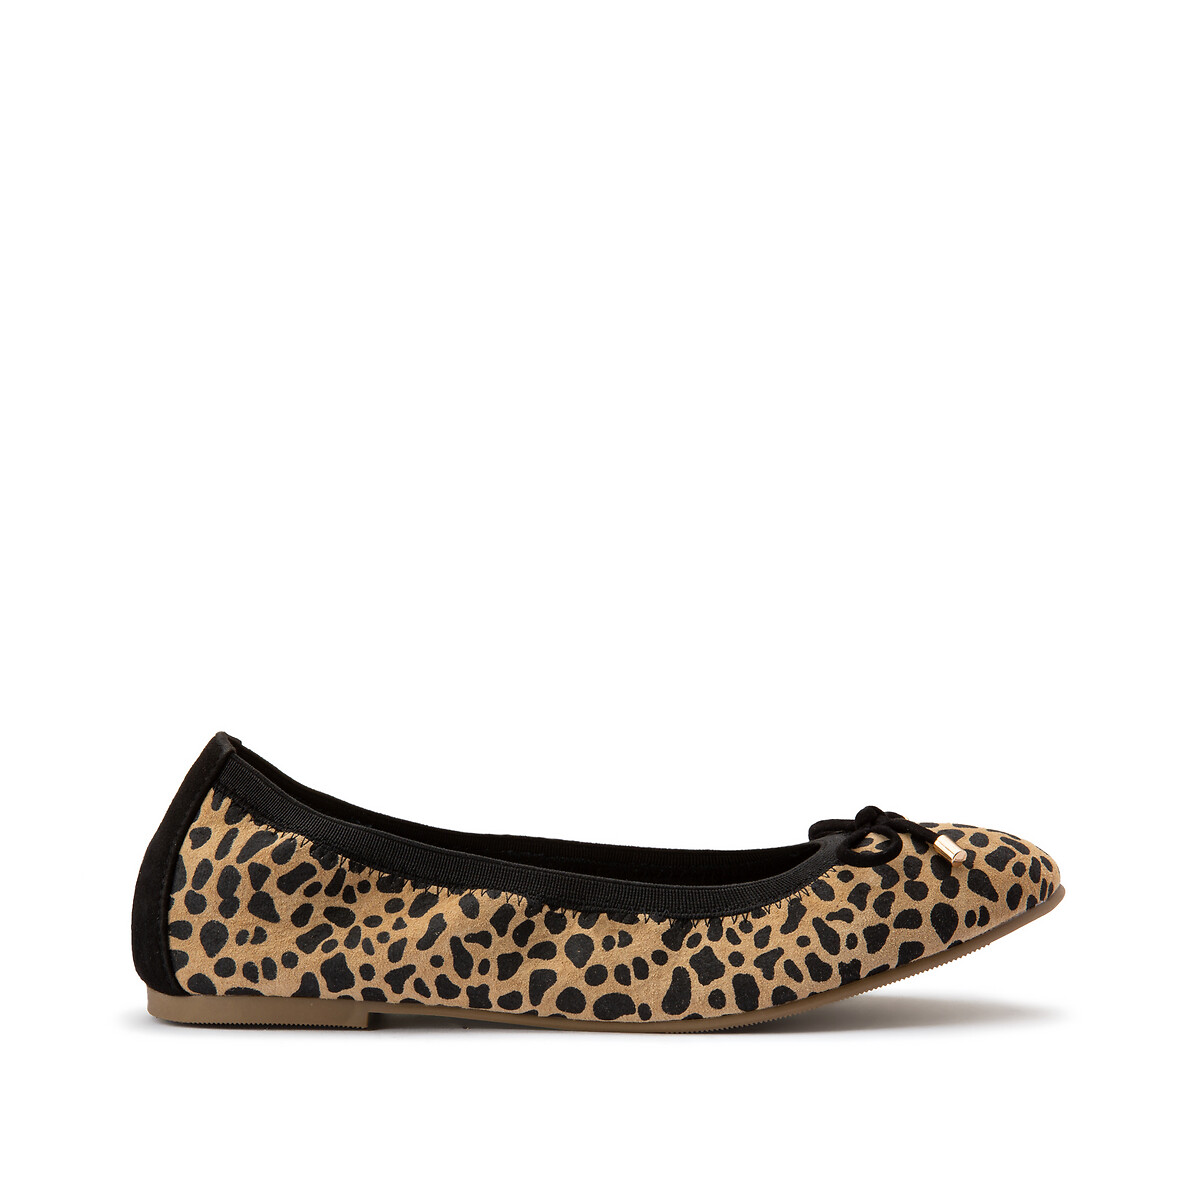 Leather ballet flats leopard Anne Weyburn |